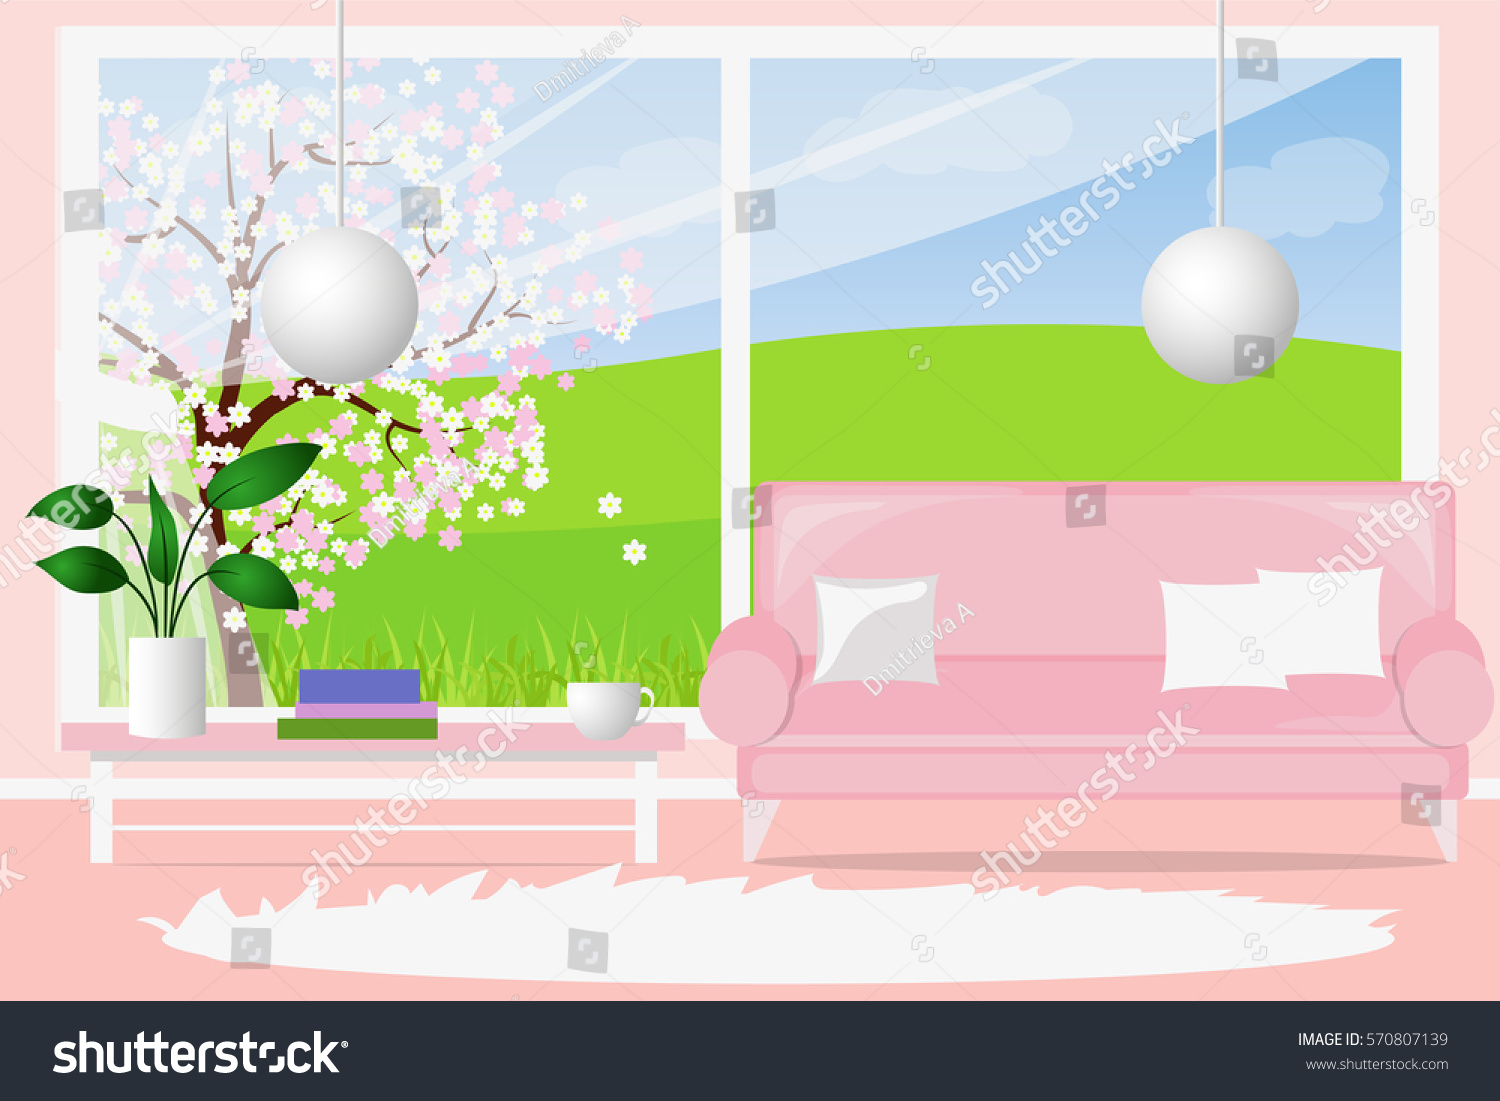 Living Room Large Window Lightflooded Cartoon Stock Vector Royalty Free 570807139